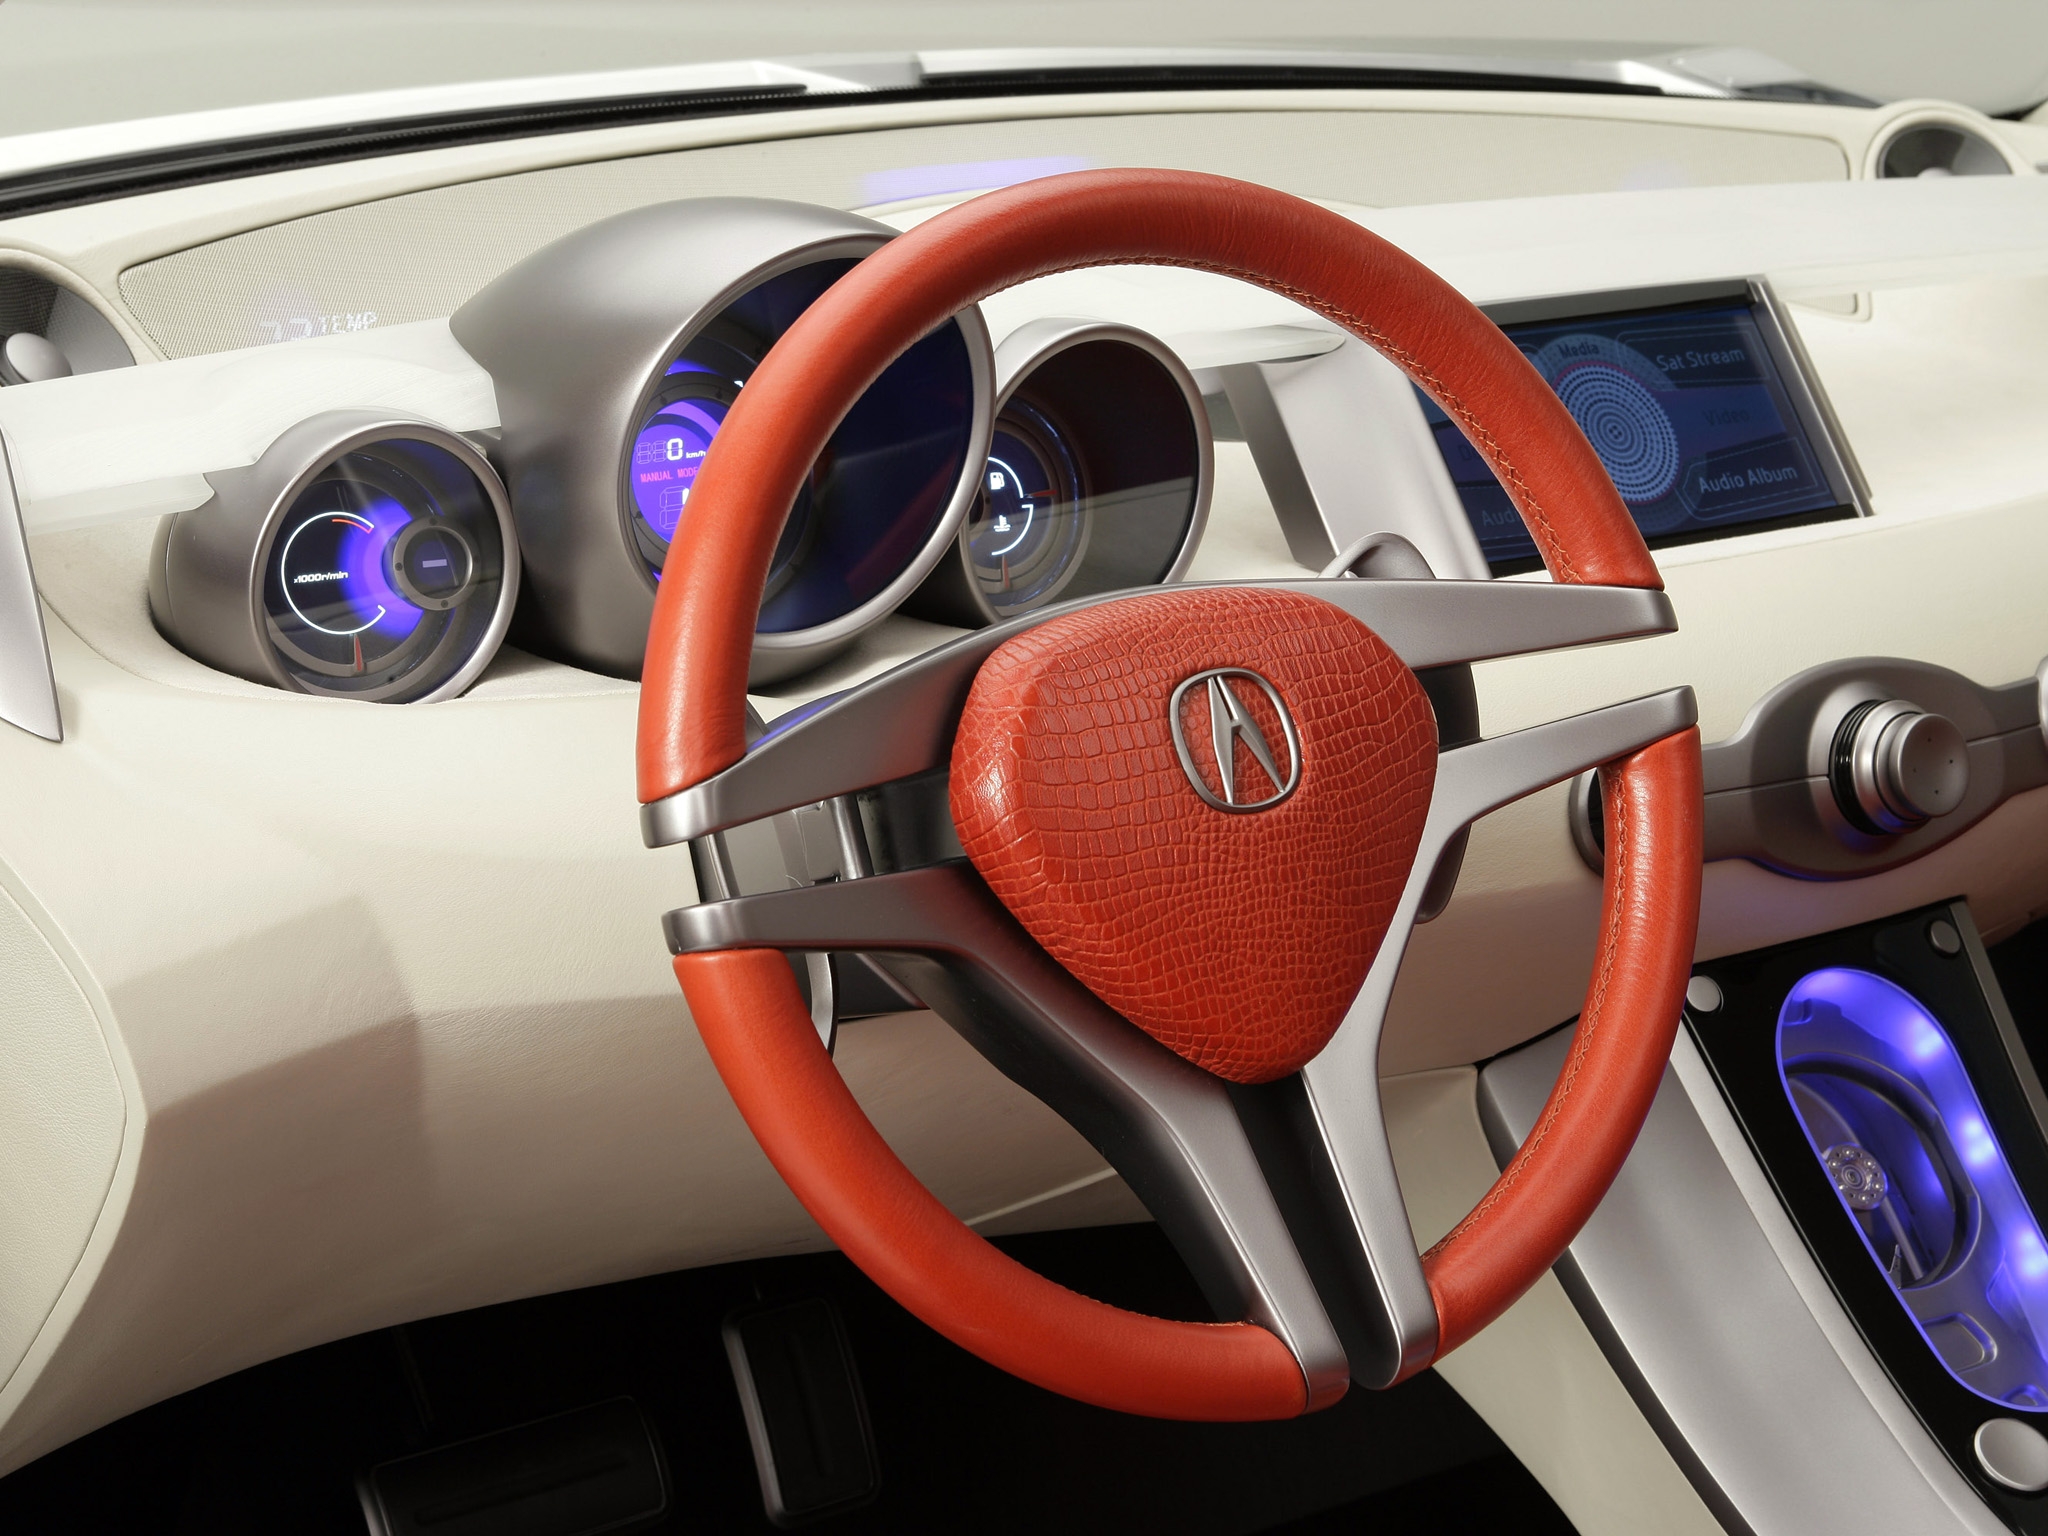 acura, interior, cars, concept, steering wheel, rudder, salon, speedometer, rd x